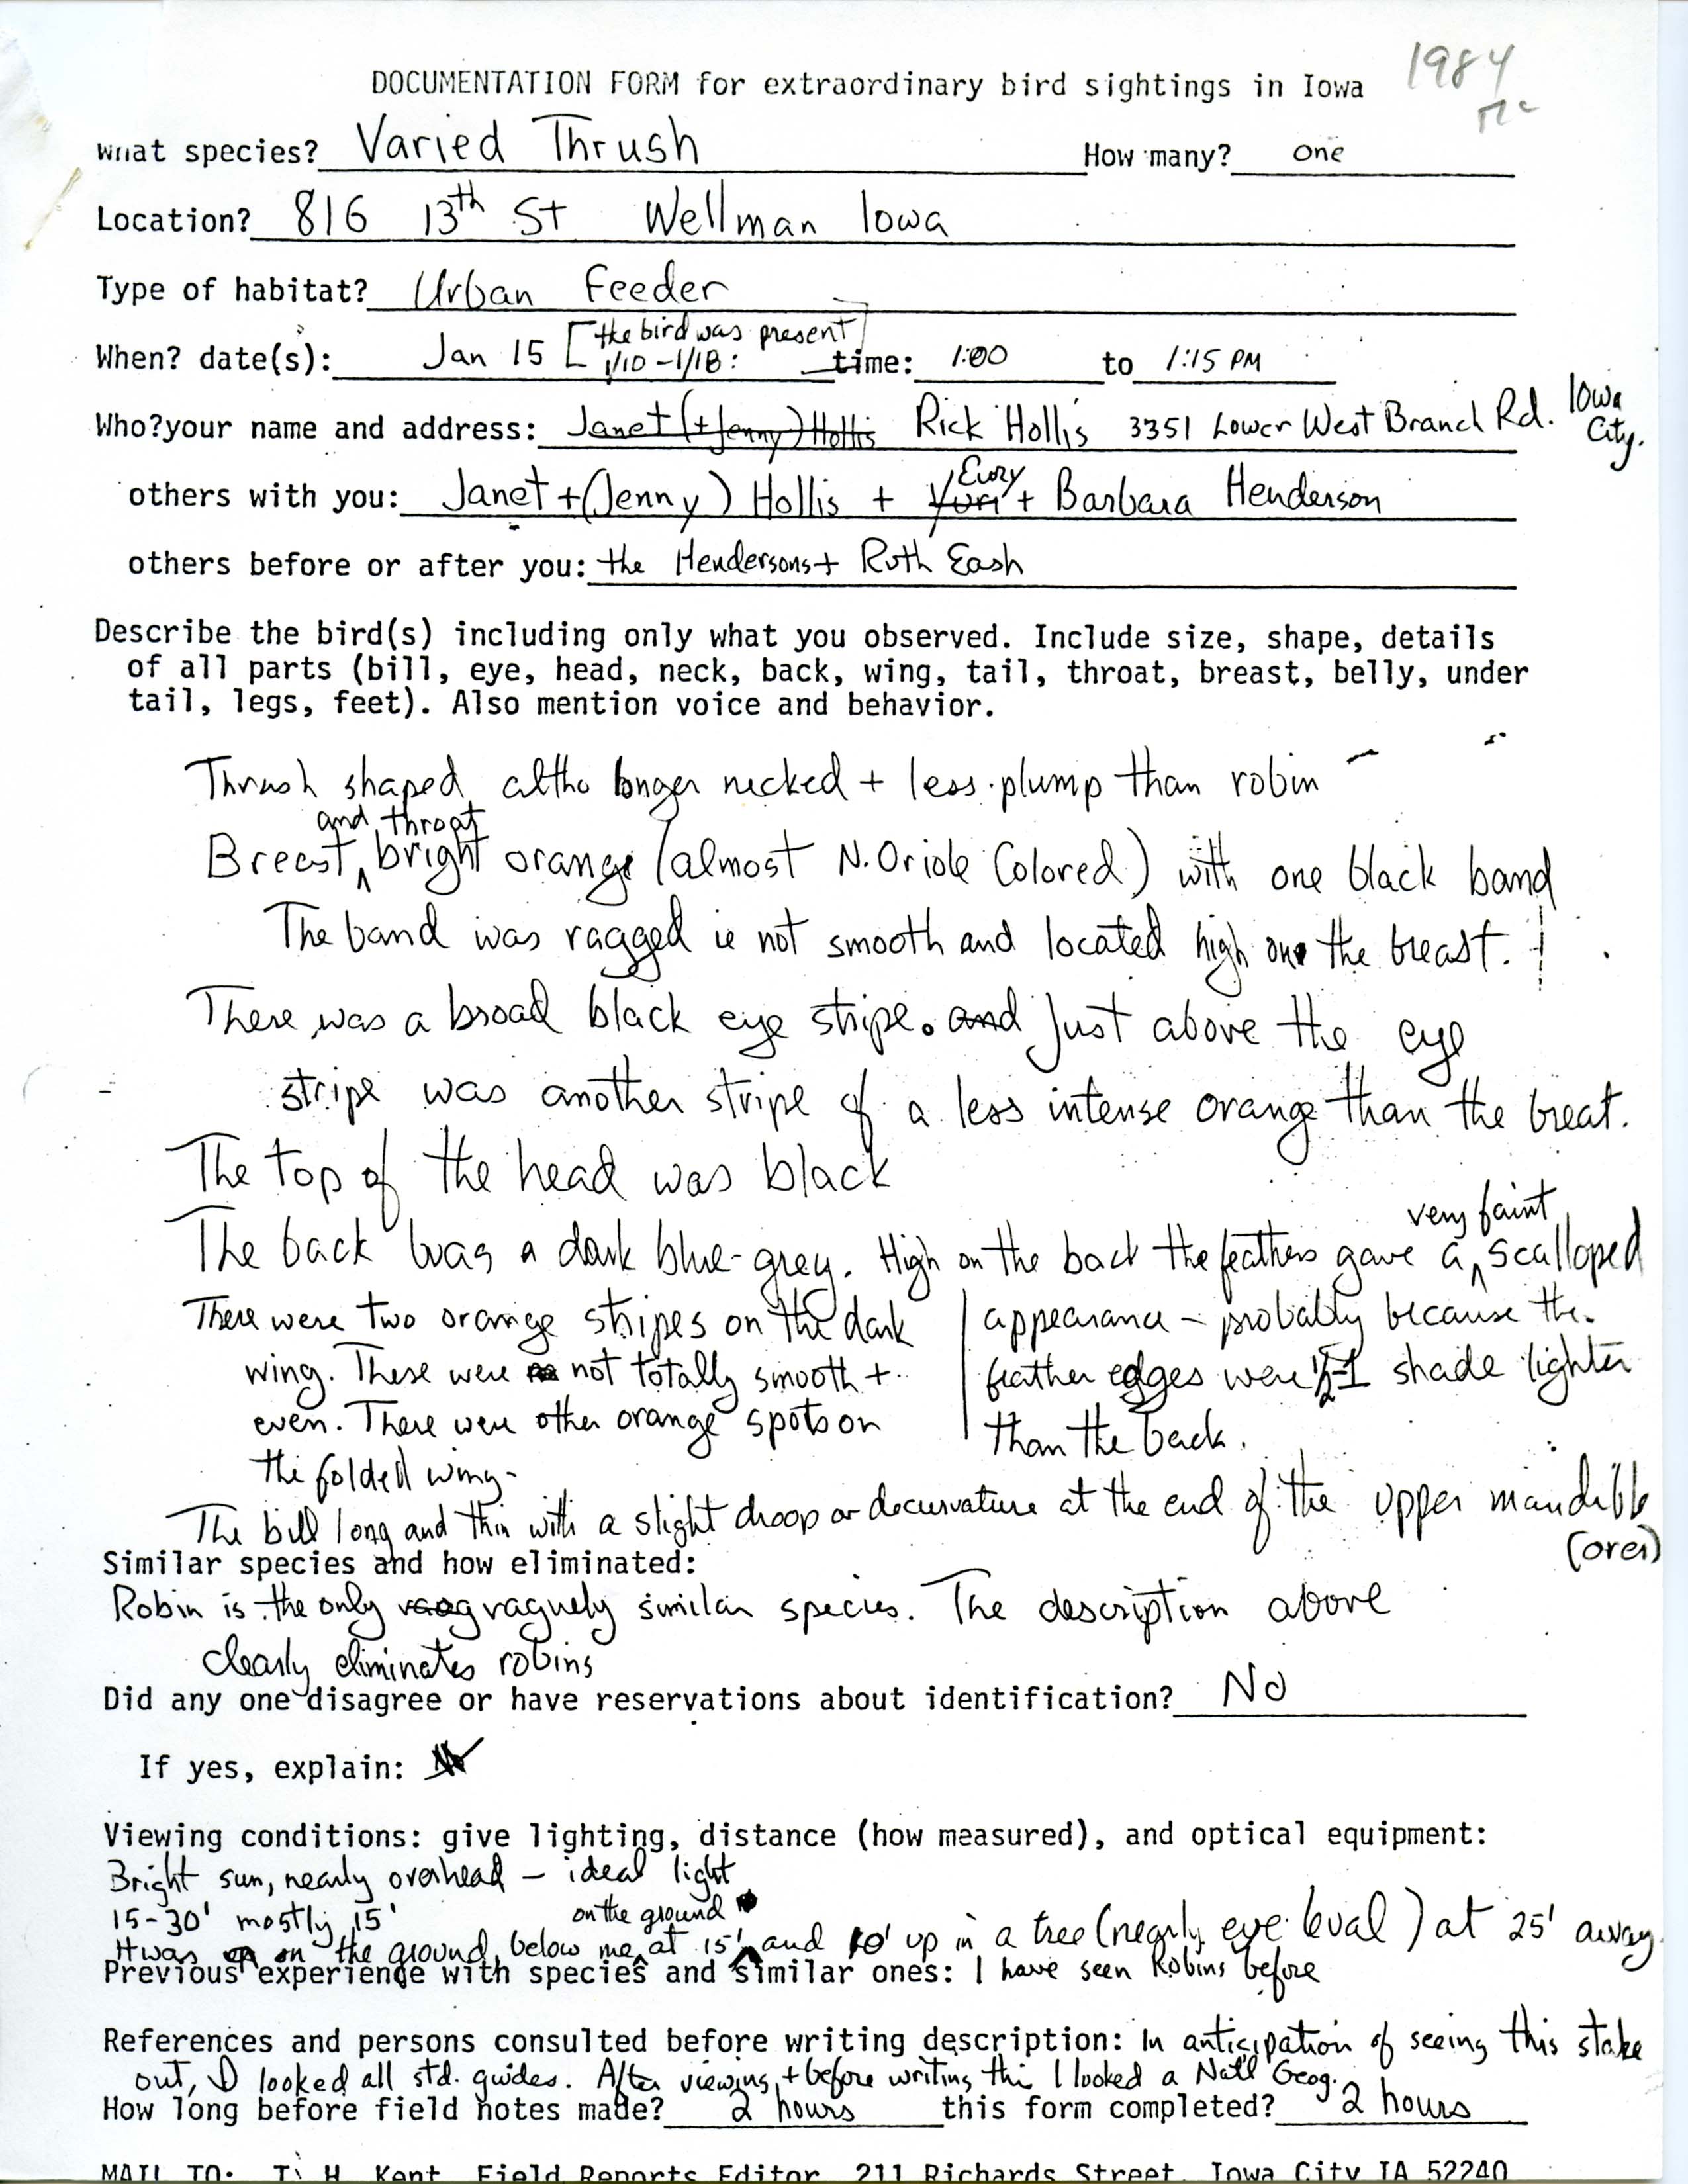 Rare bird documentation form for Varied Thrush at Wellman, 1984